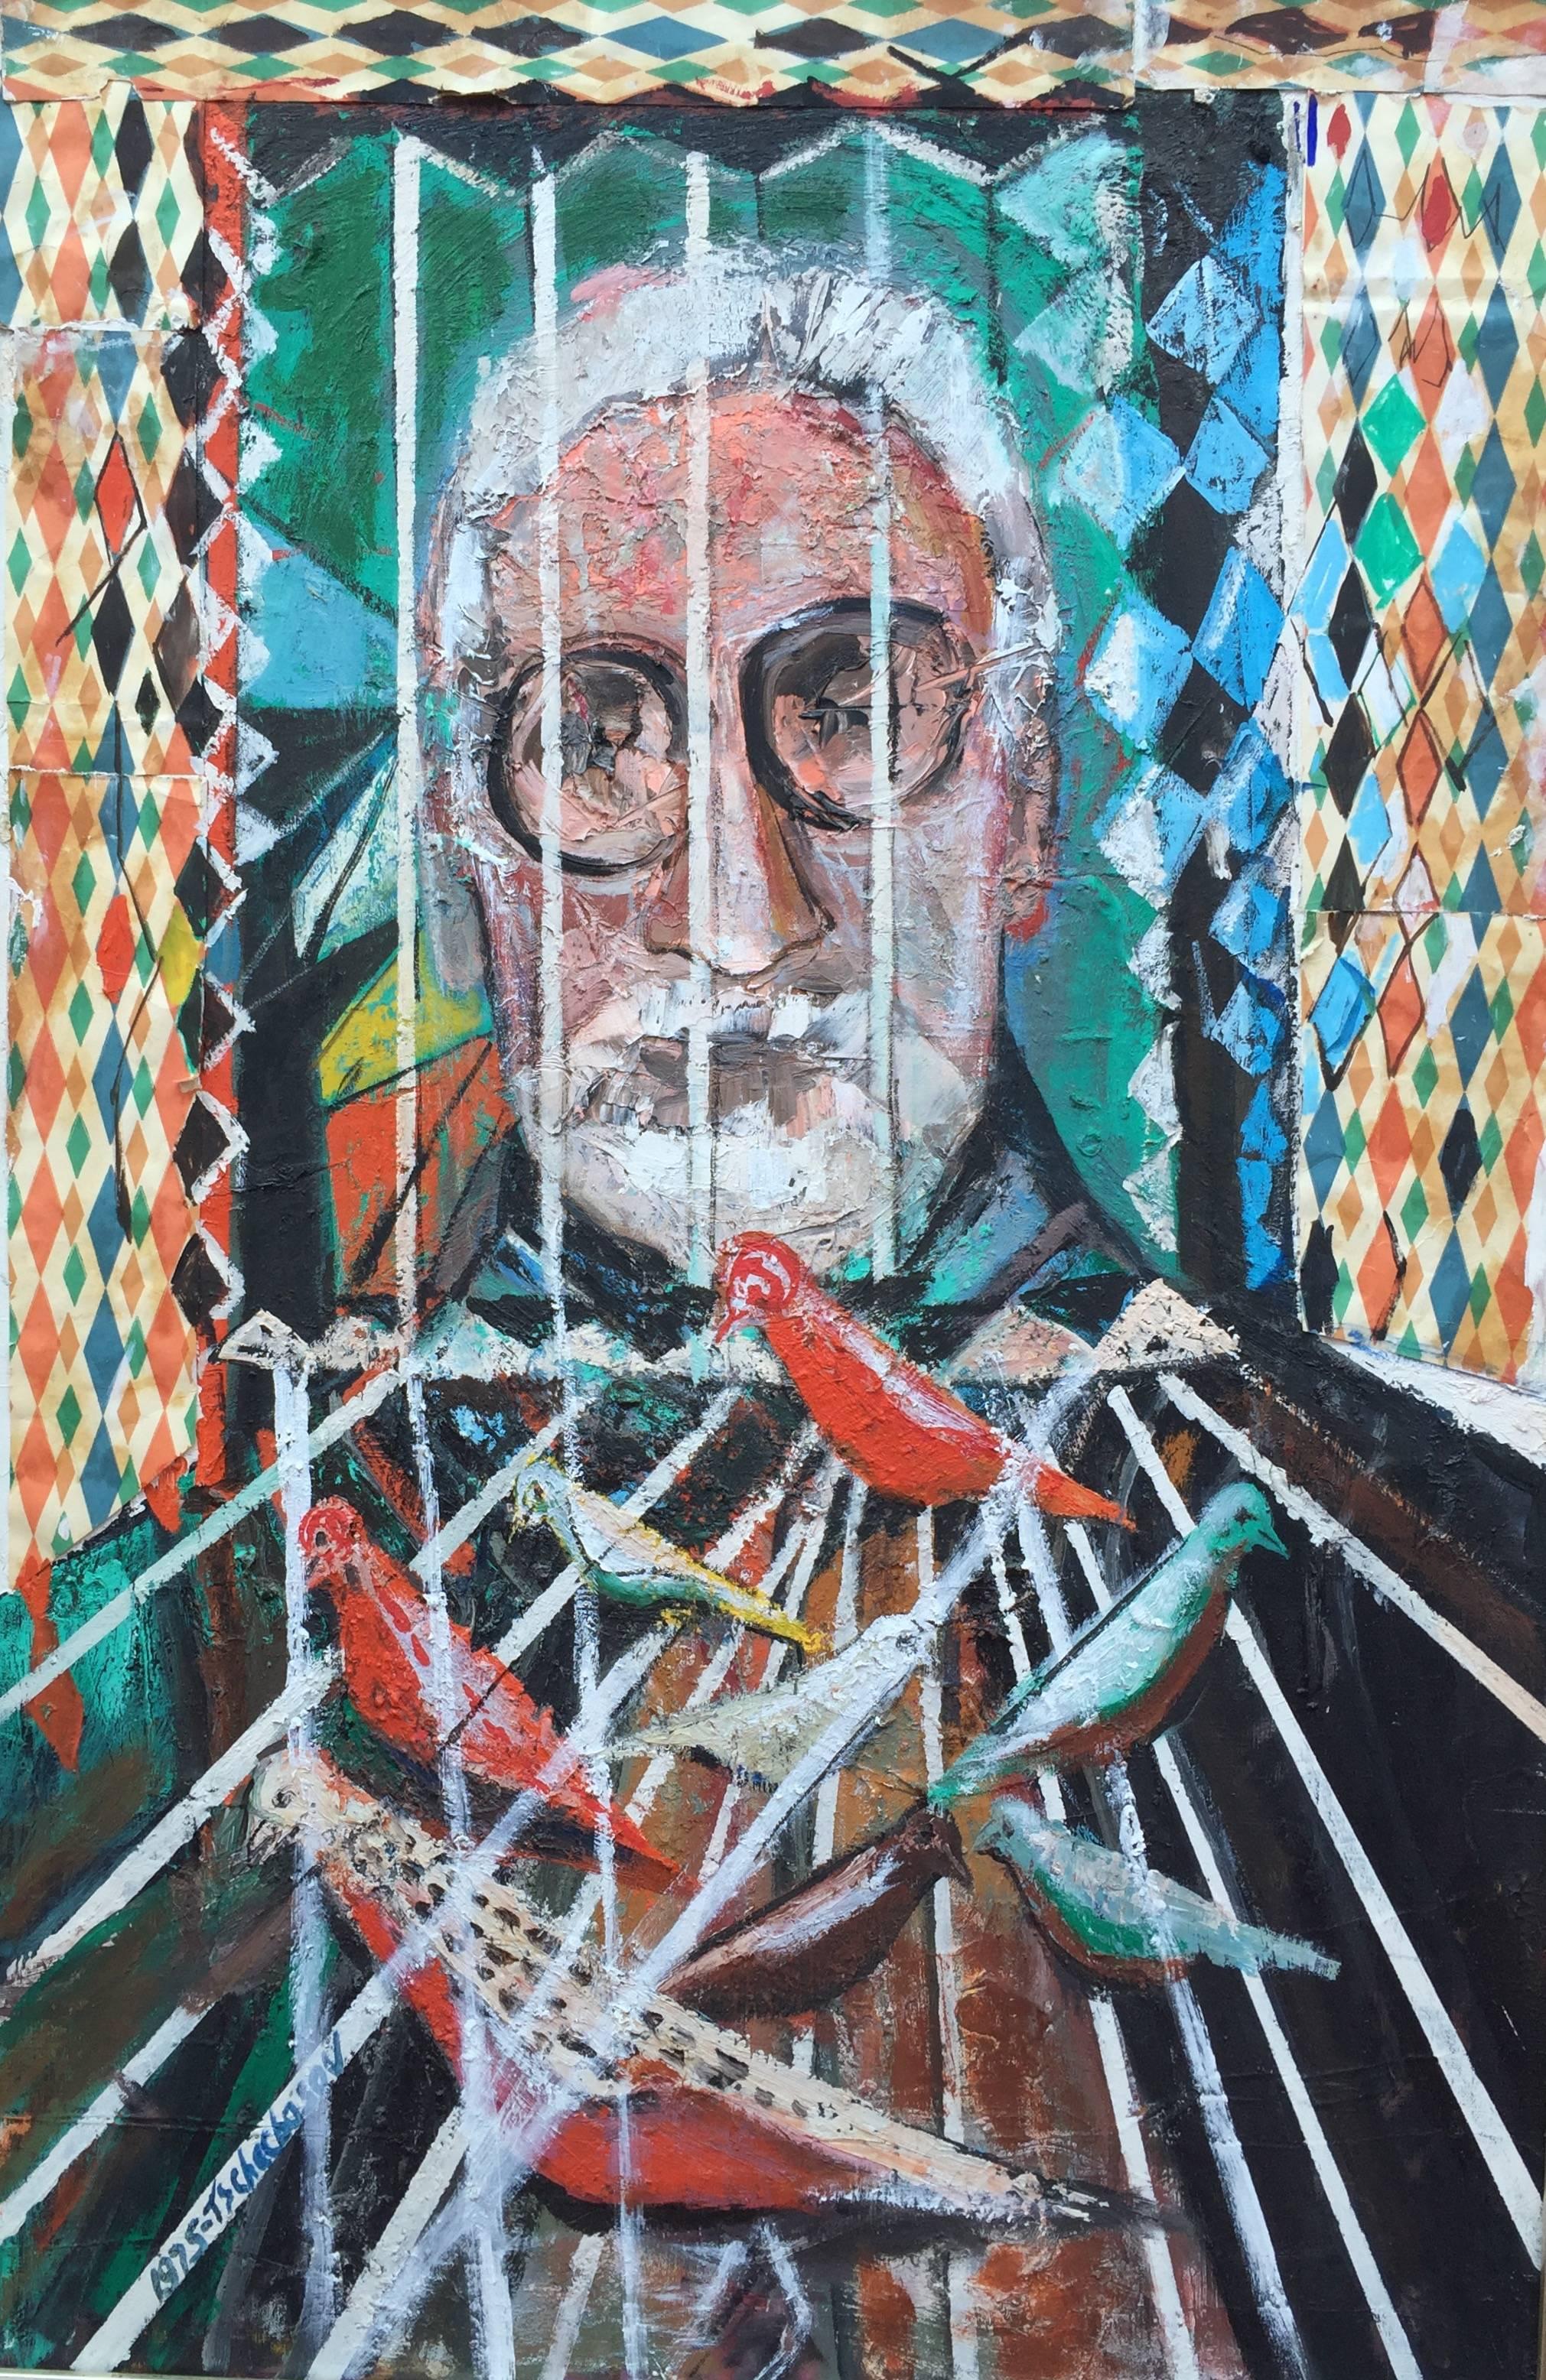 Nahum Tschacbasov Portrait Painting - "Portrait of Millen Brand"